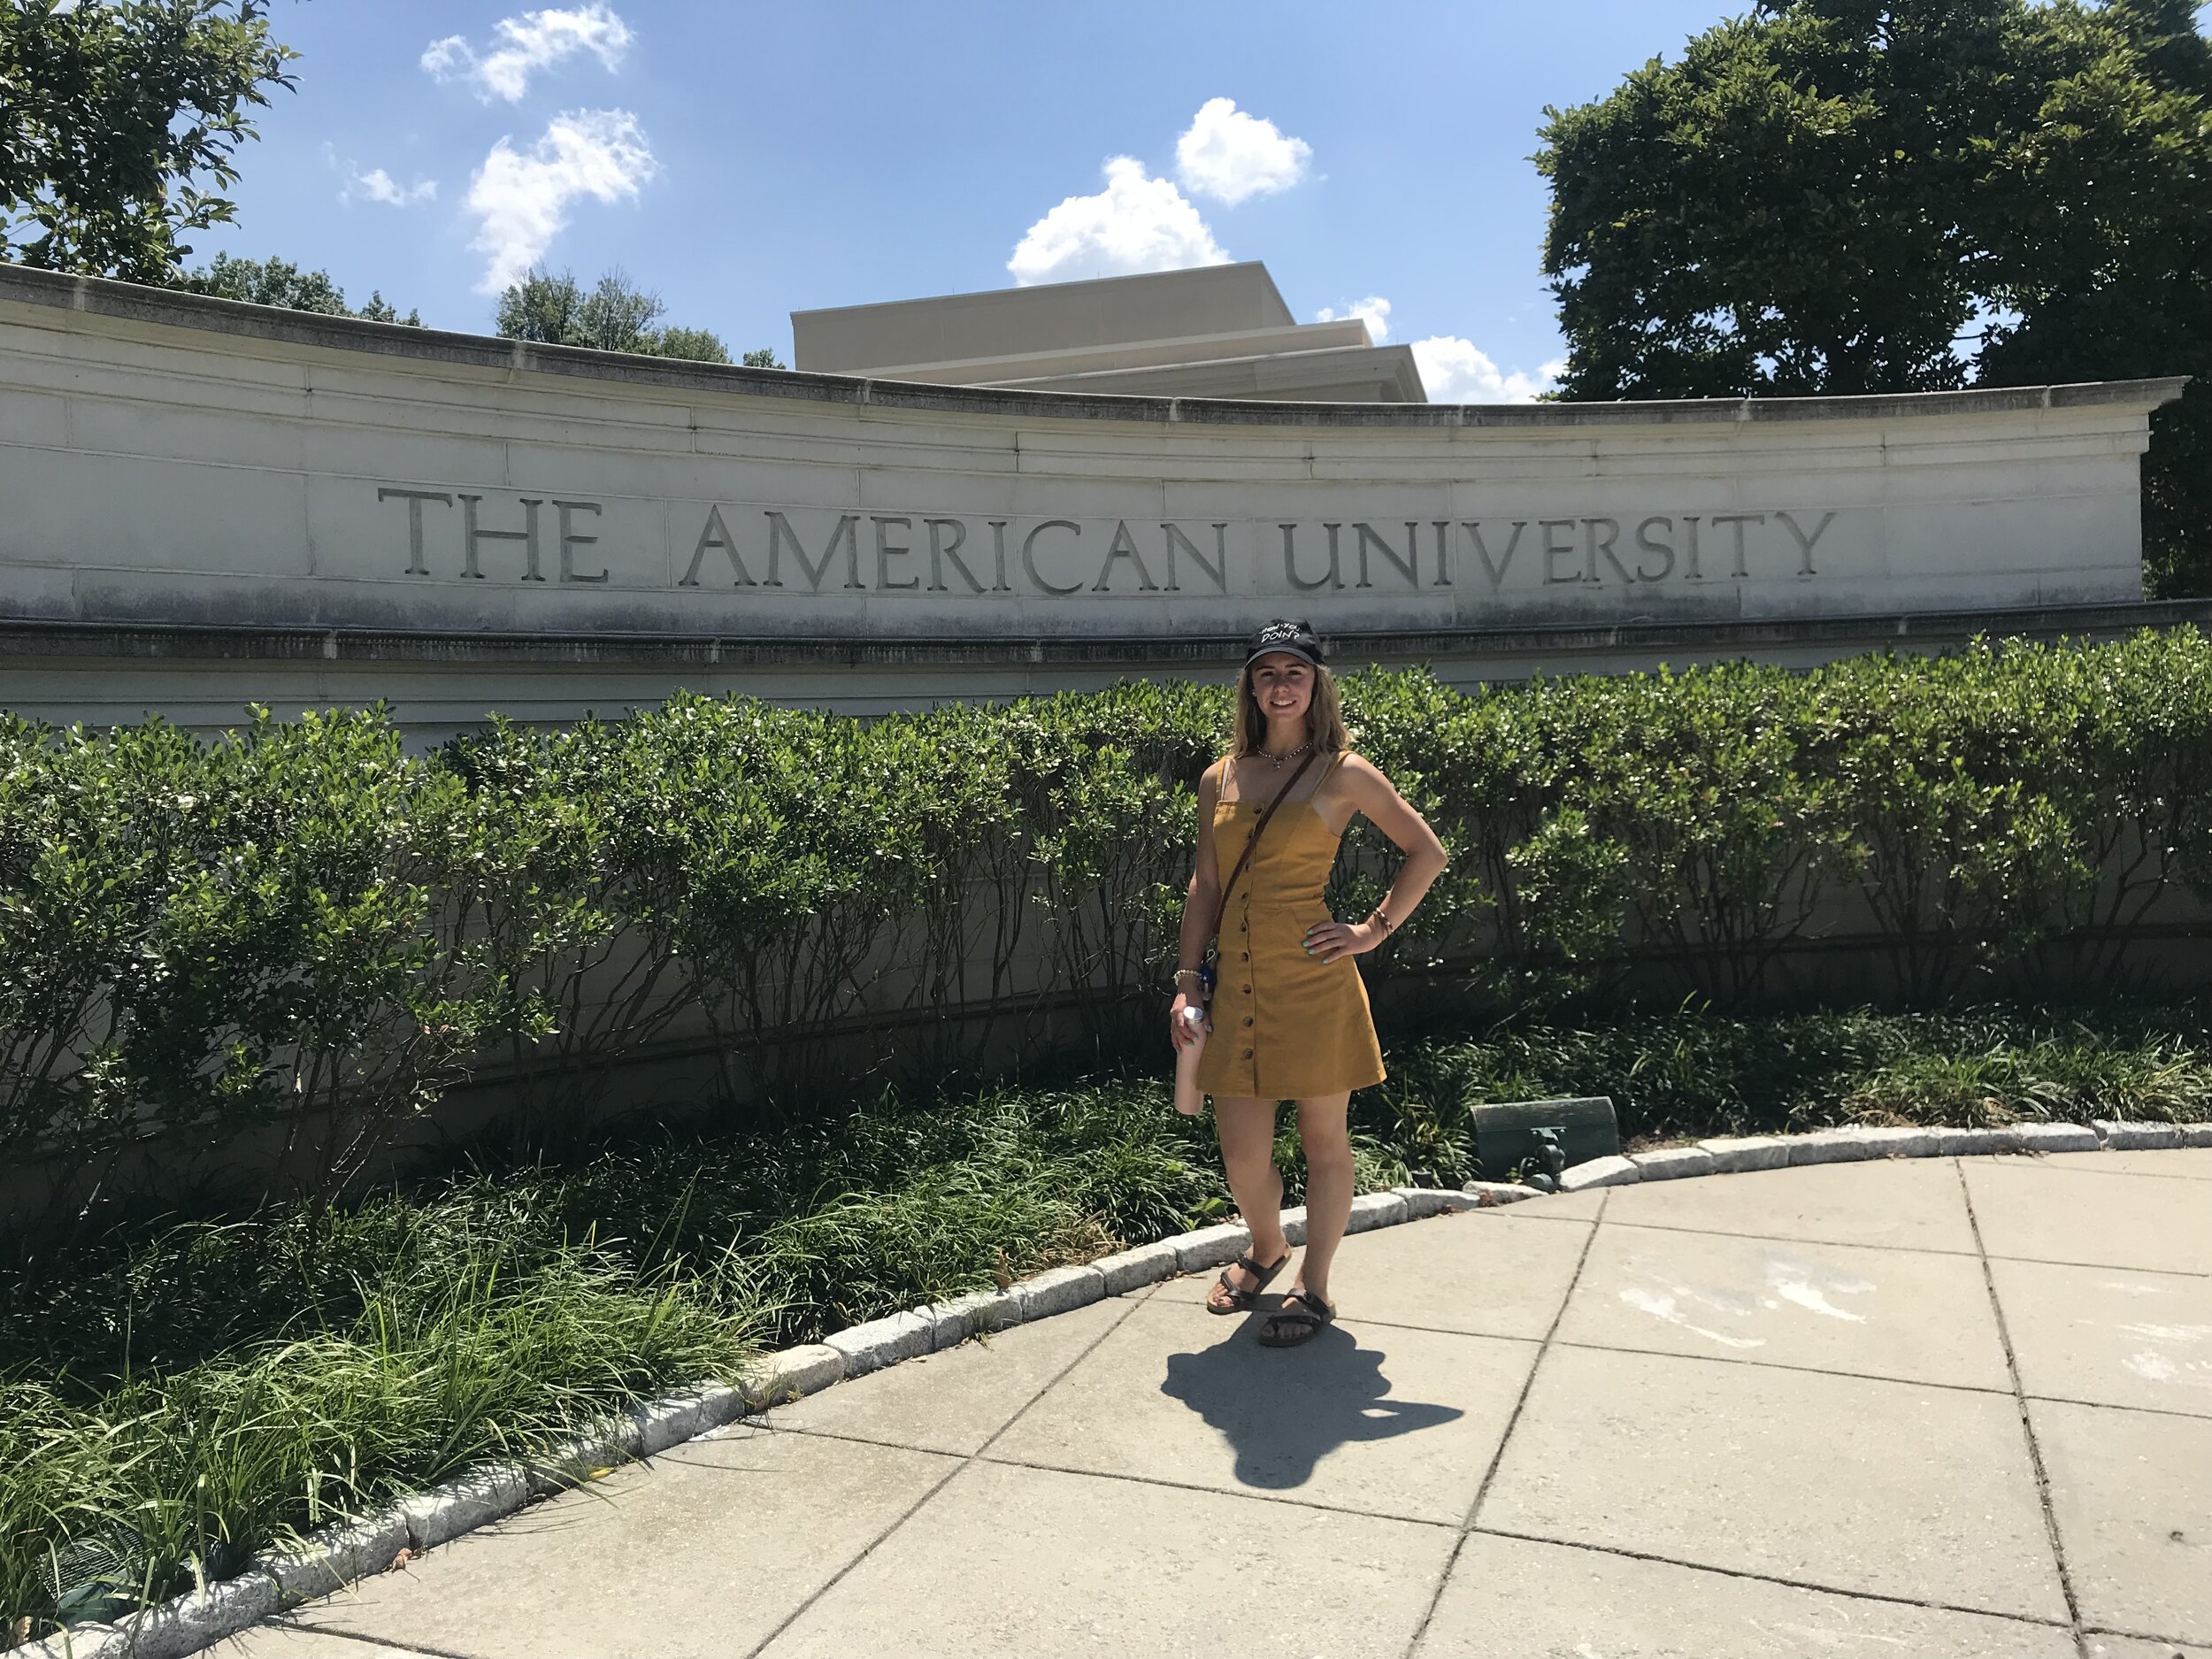 Miryam attends The American University in Washington D.C.